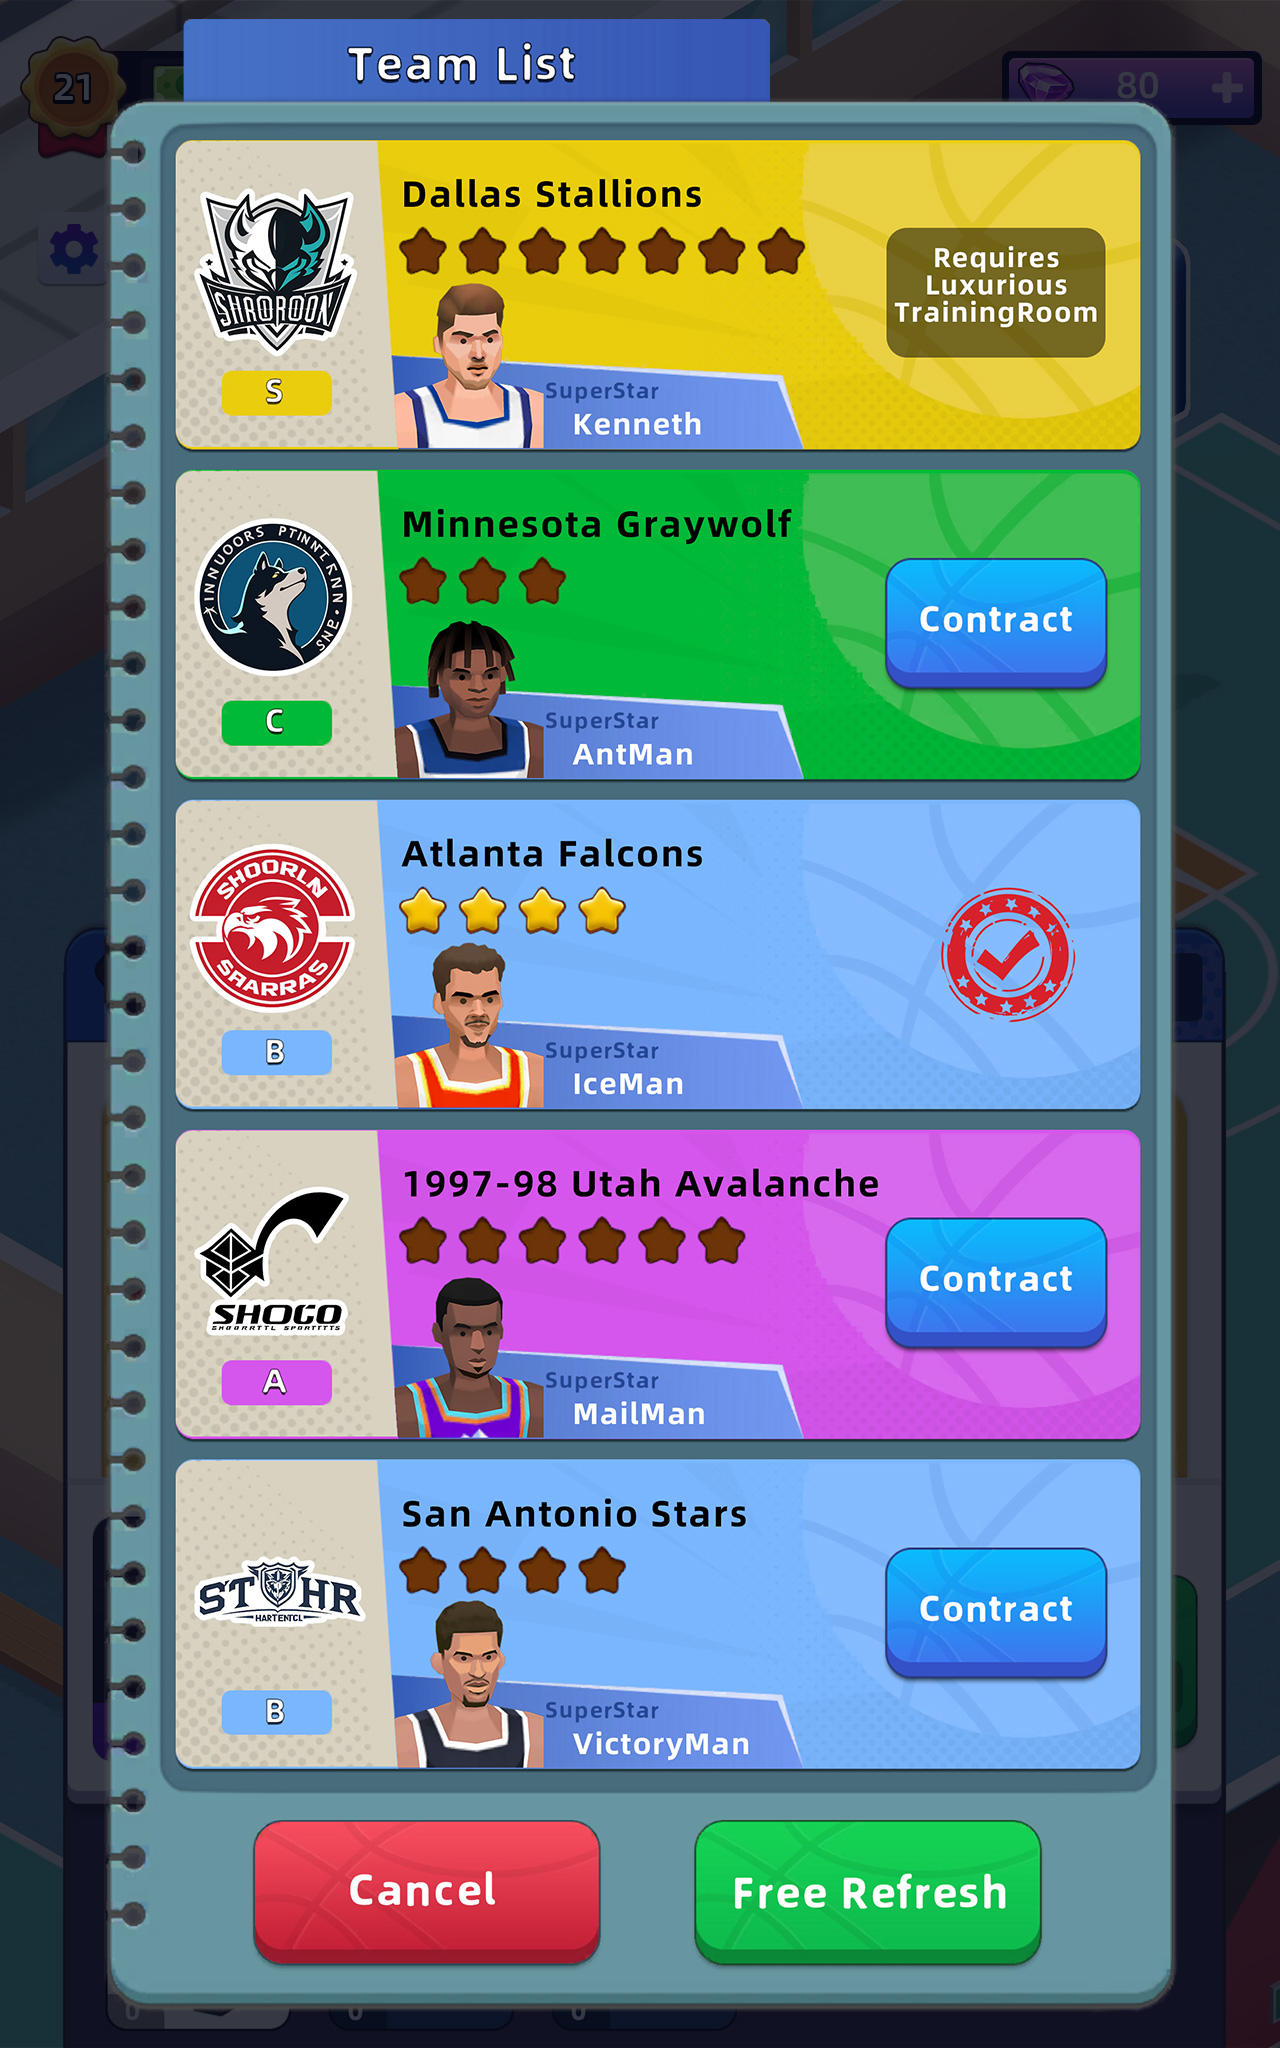 Idle Basketball Arena Tycoon screenshot game